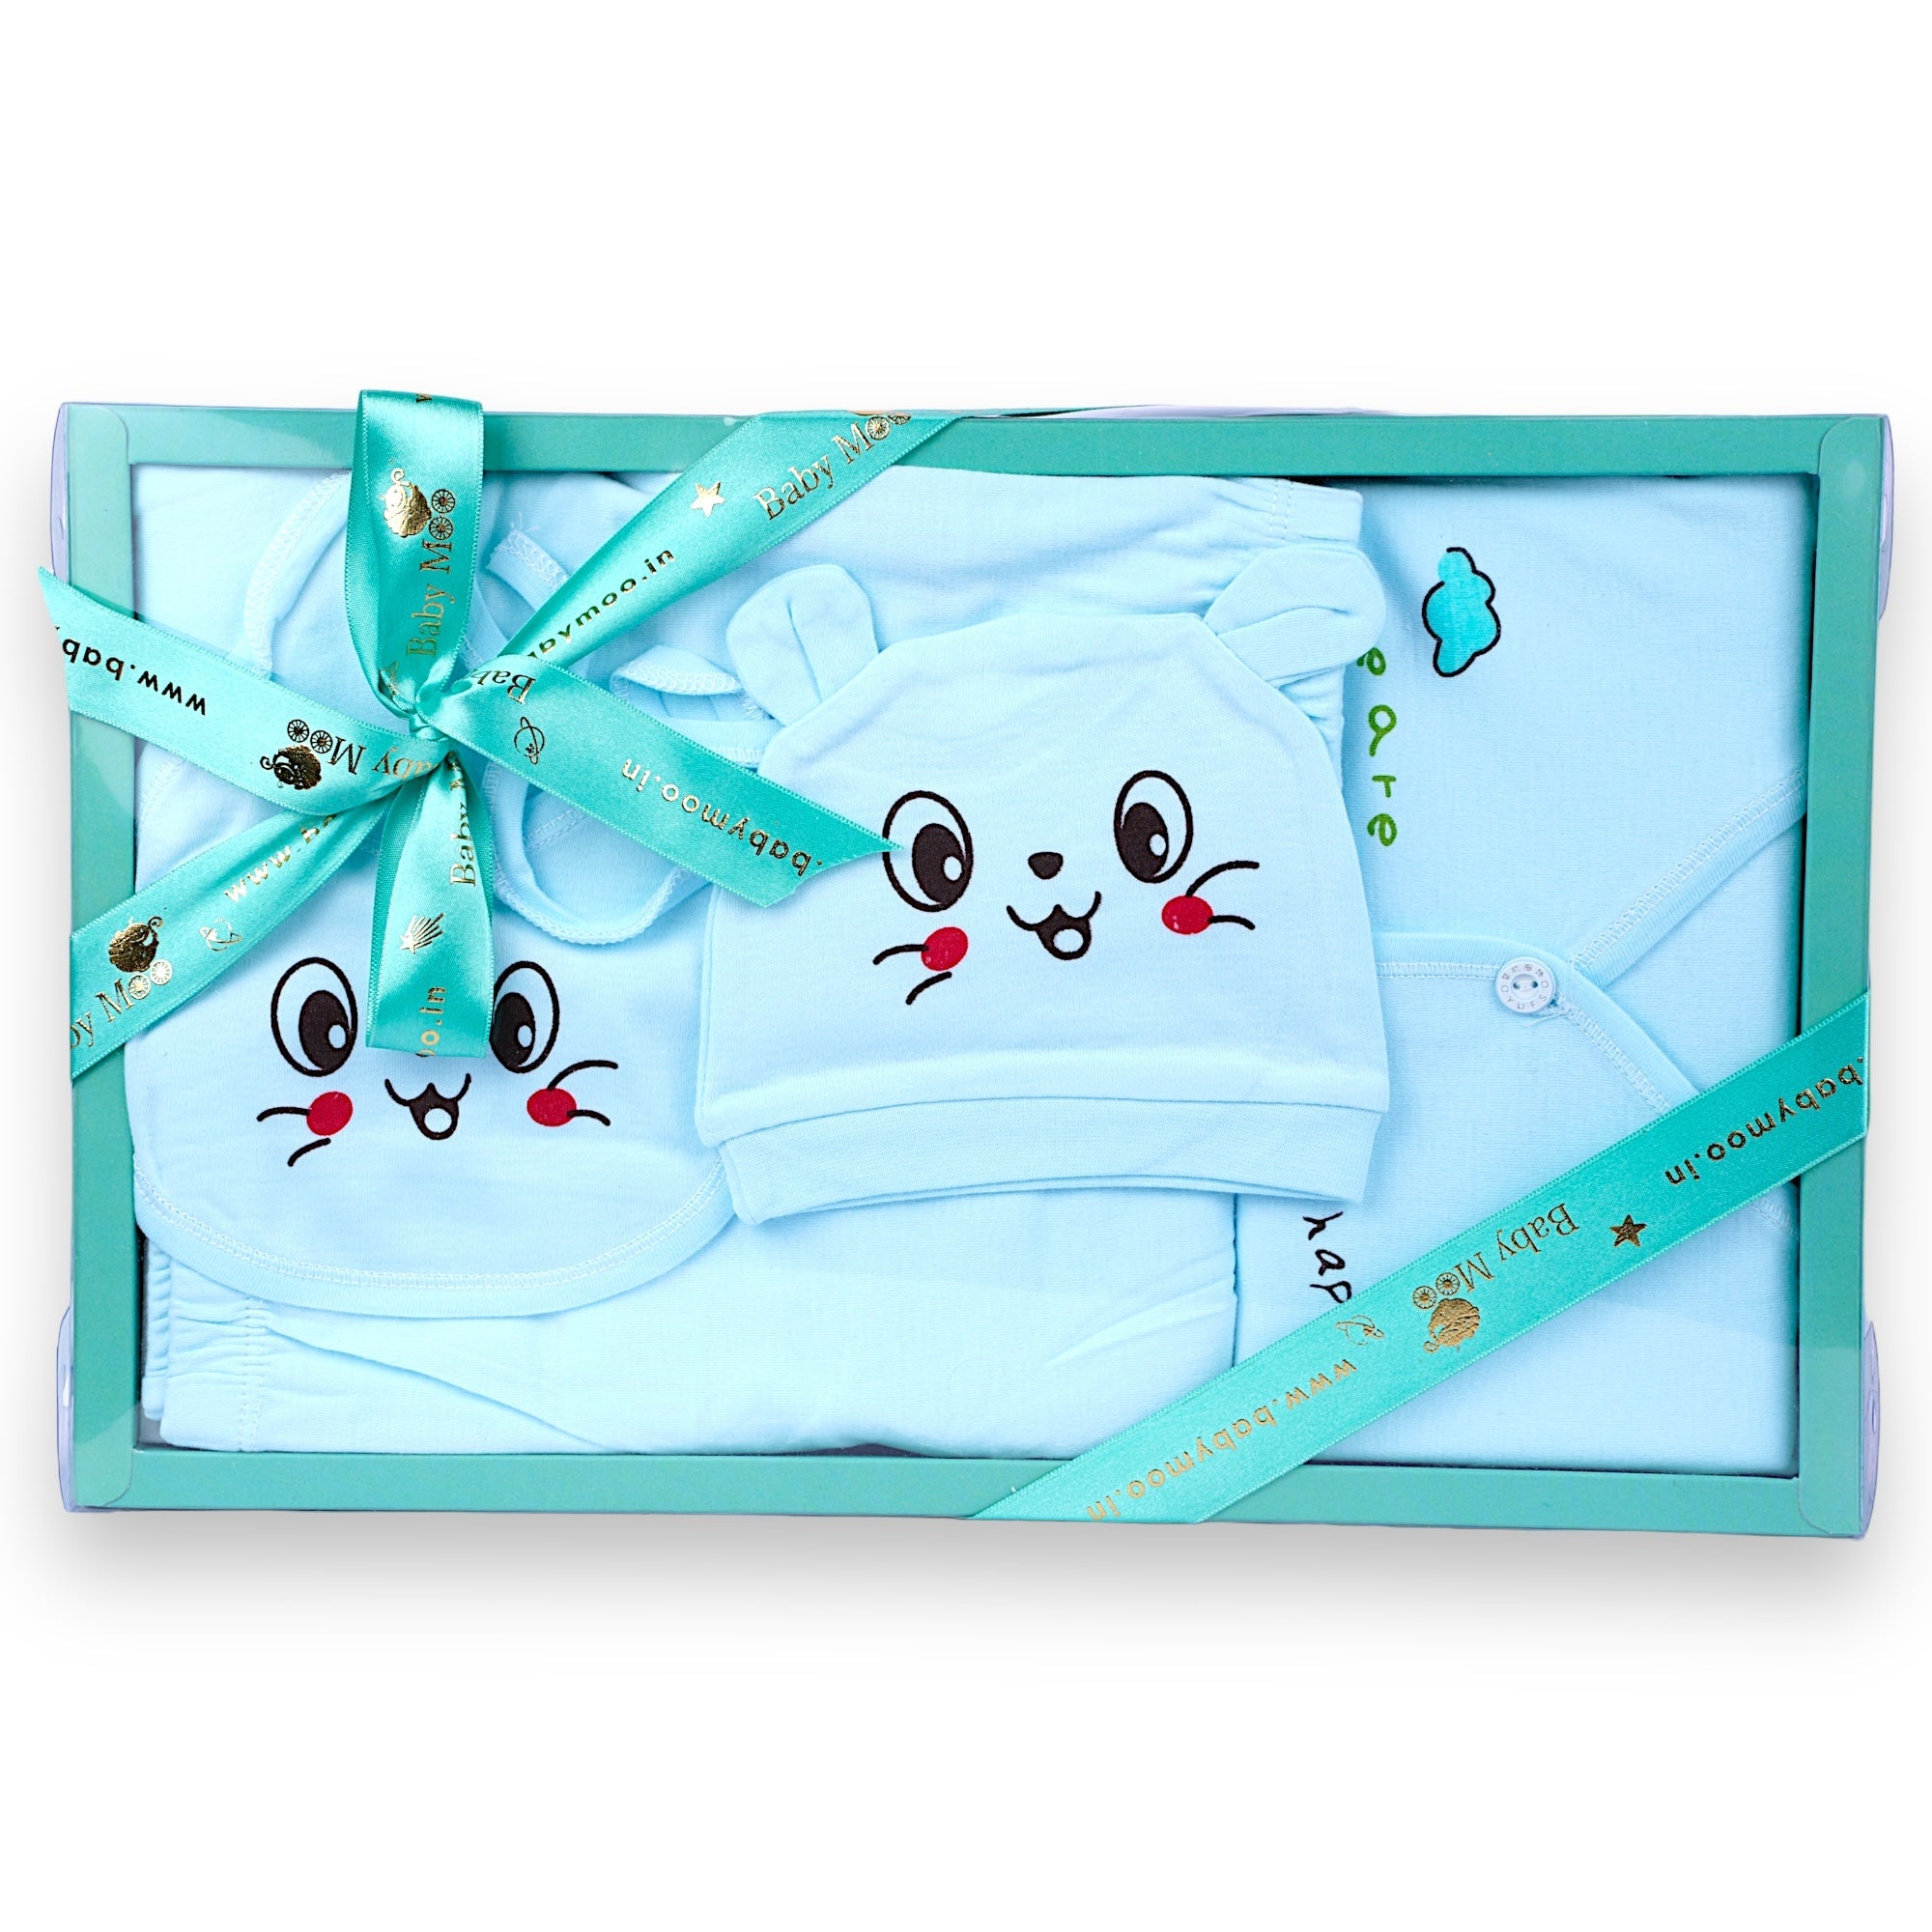 Baby Moo Cool Cat Print Cap Bib Pyjamas 5 Pcs Clothing Gift Set - Blue